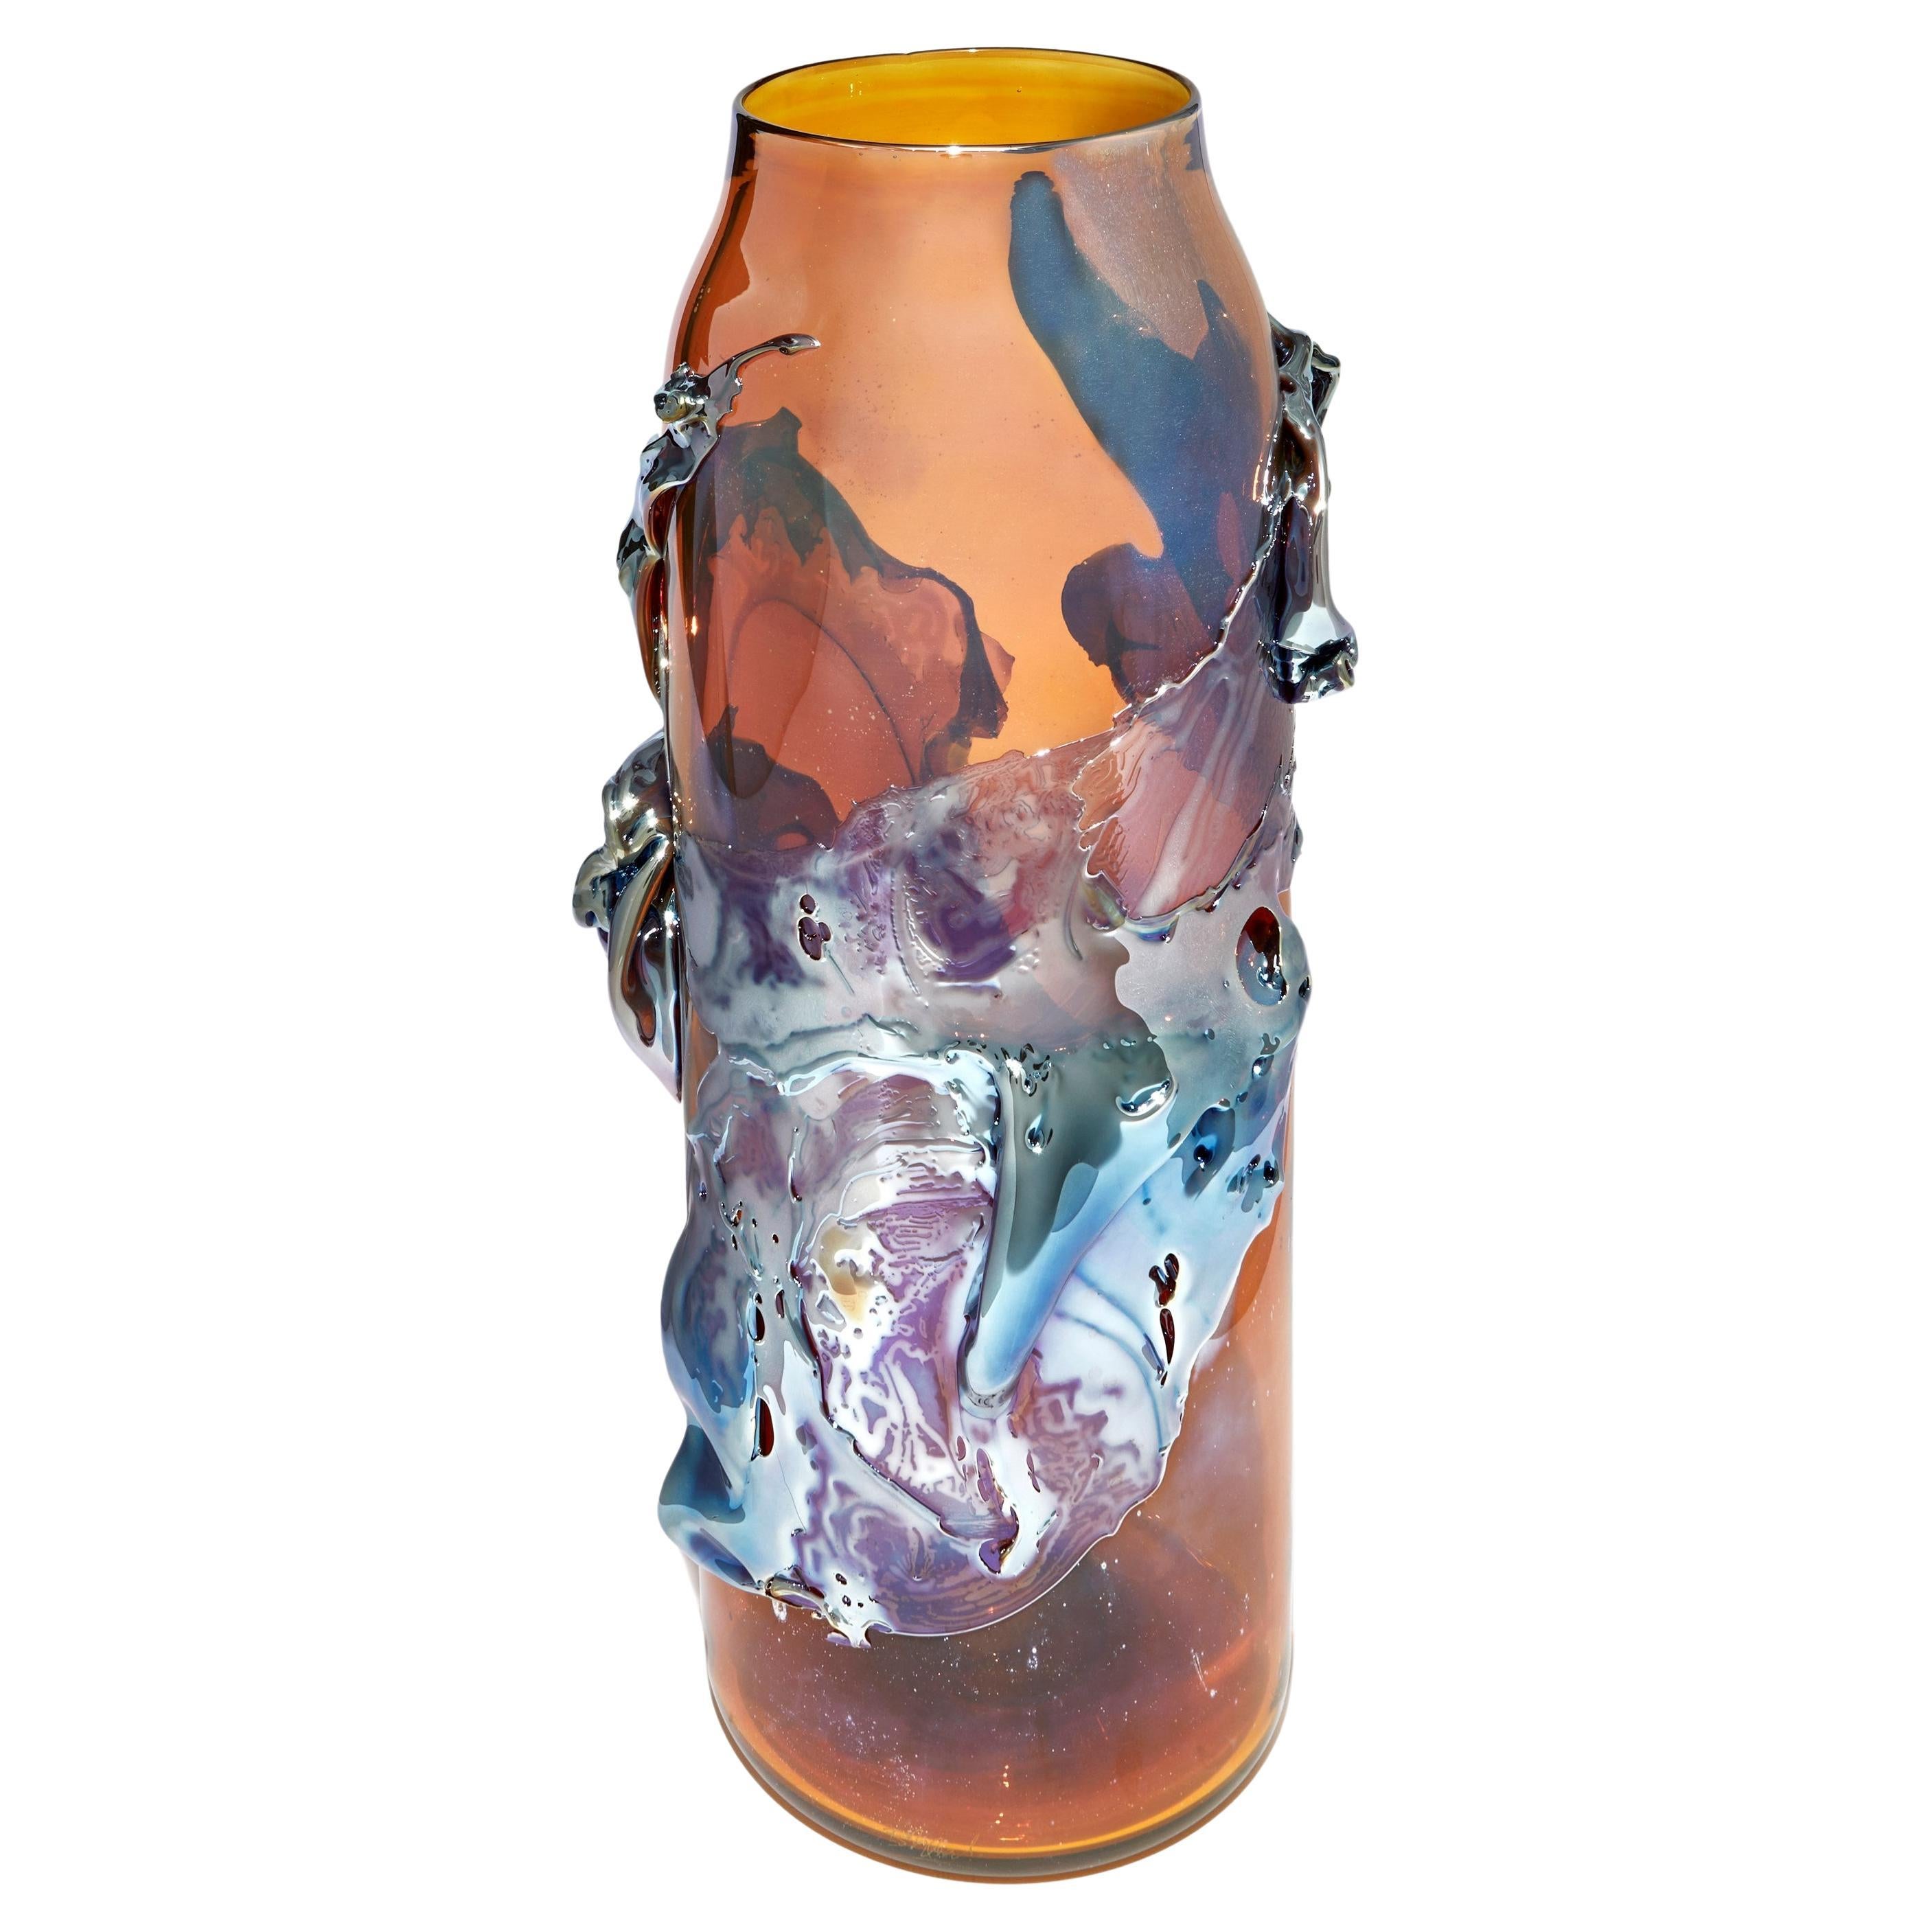 Panorama in Nectar, un vase en verre abstrait bleu métallisé et ambré de Bethany Wood